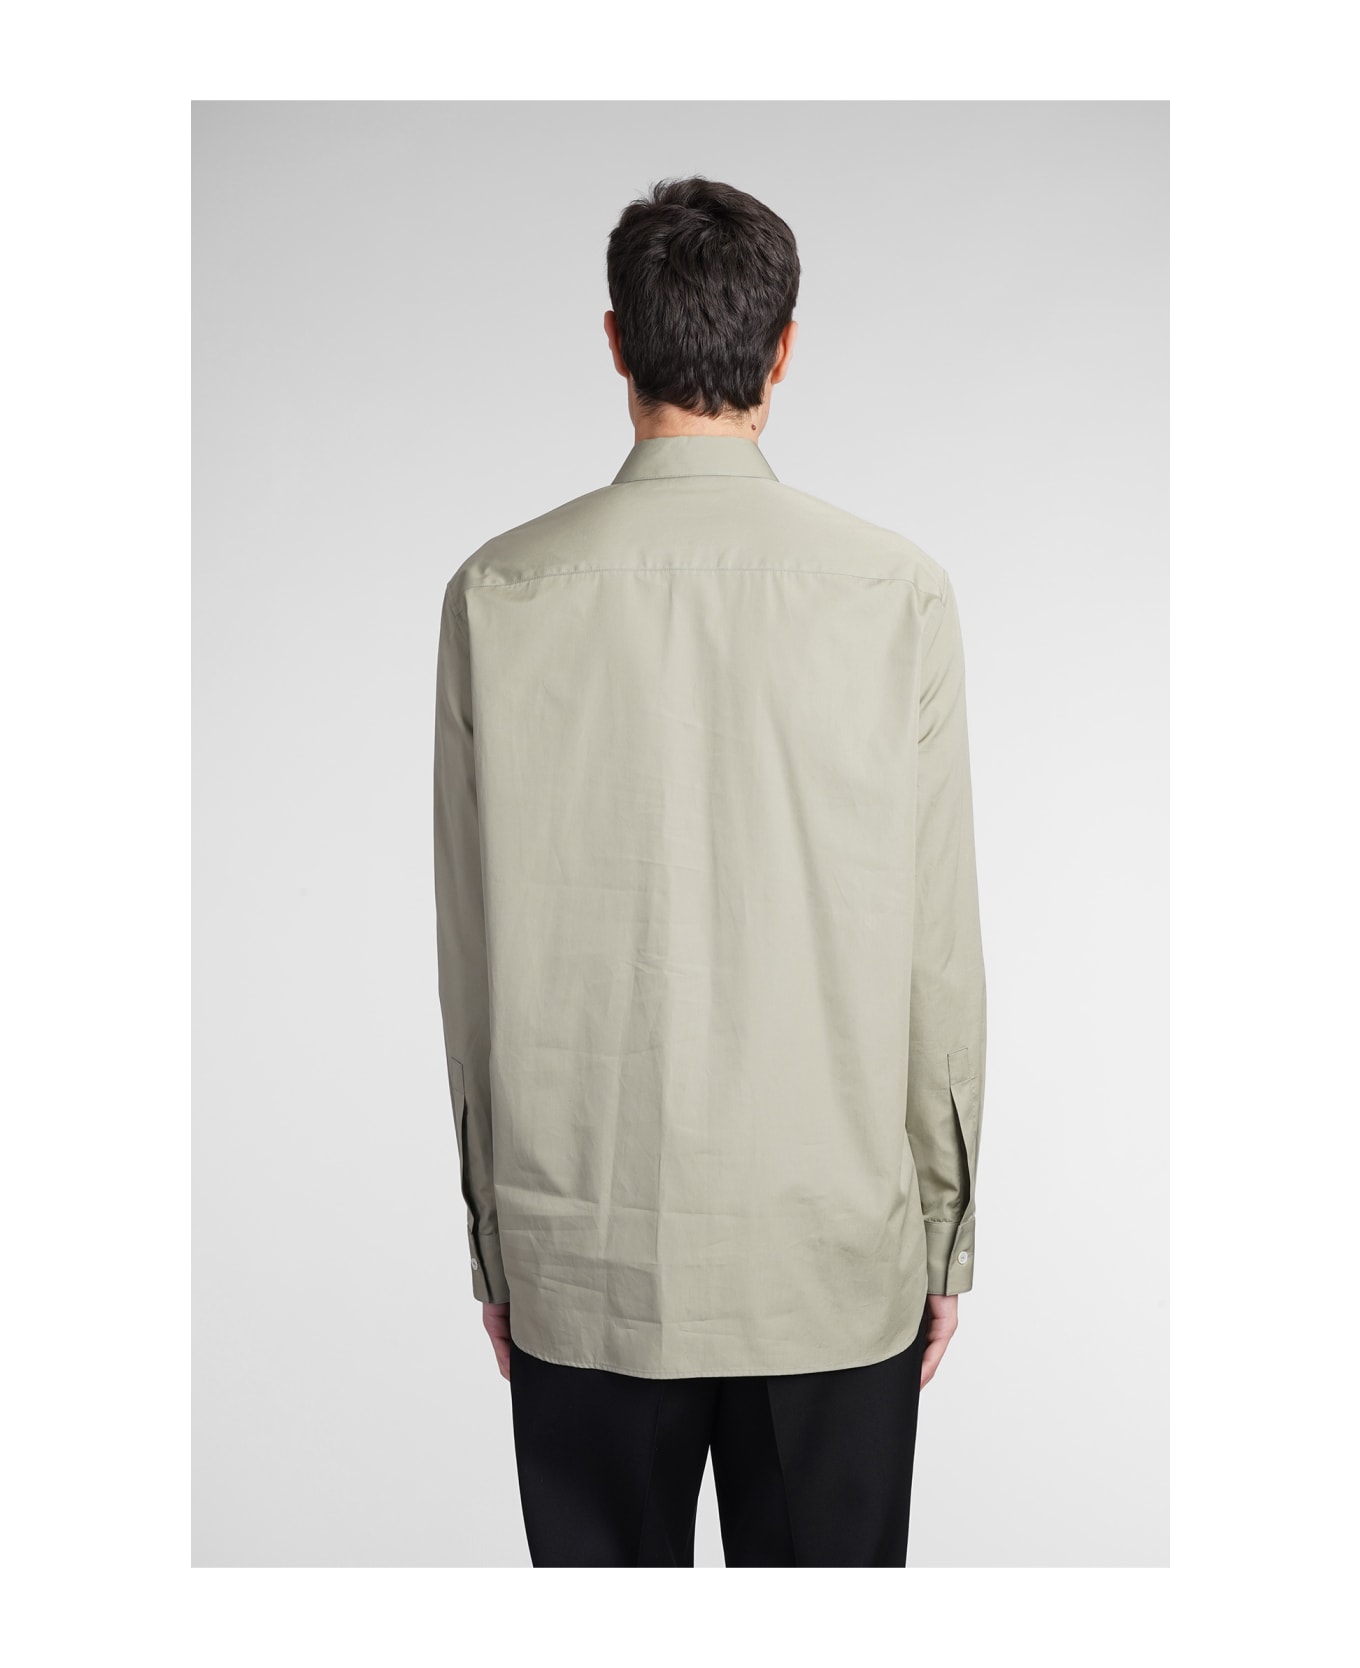 Jil Sander Shirt In Khaki Cotton - Green